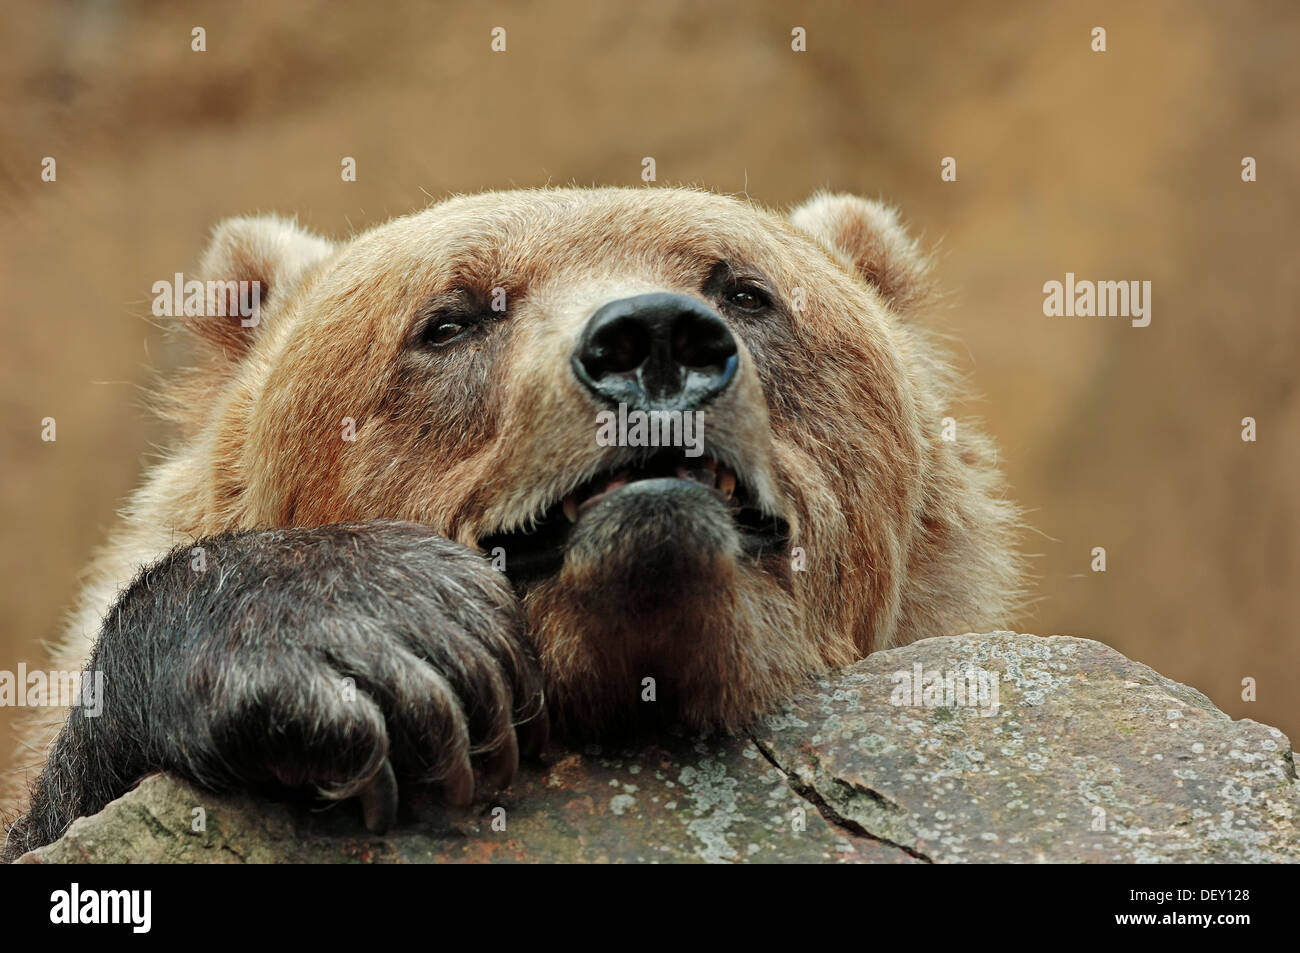 Kodiak bear (Ursus arctos middendorffi), portrait, native to Alaska, in captivity Stock Photo